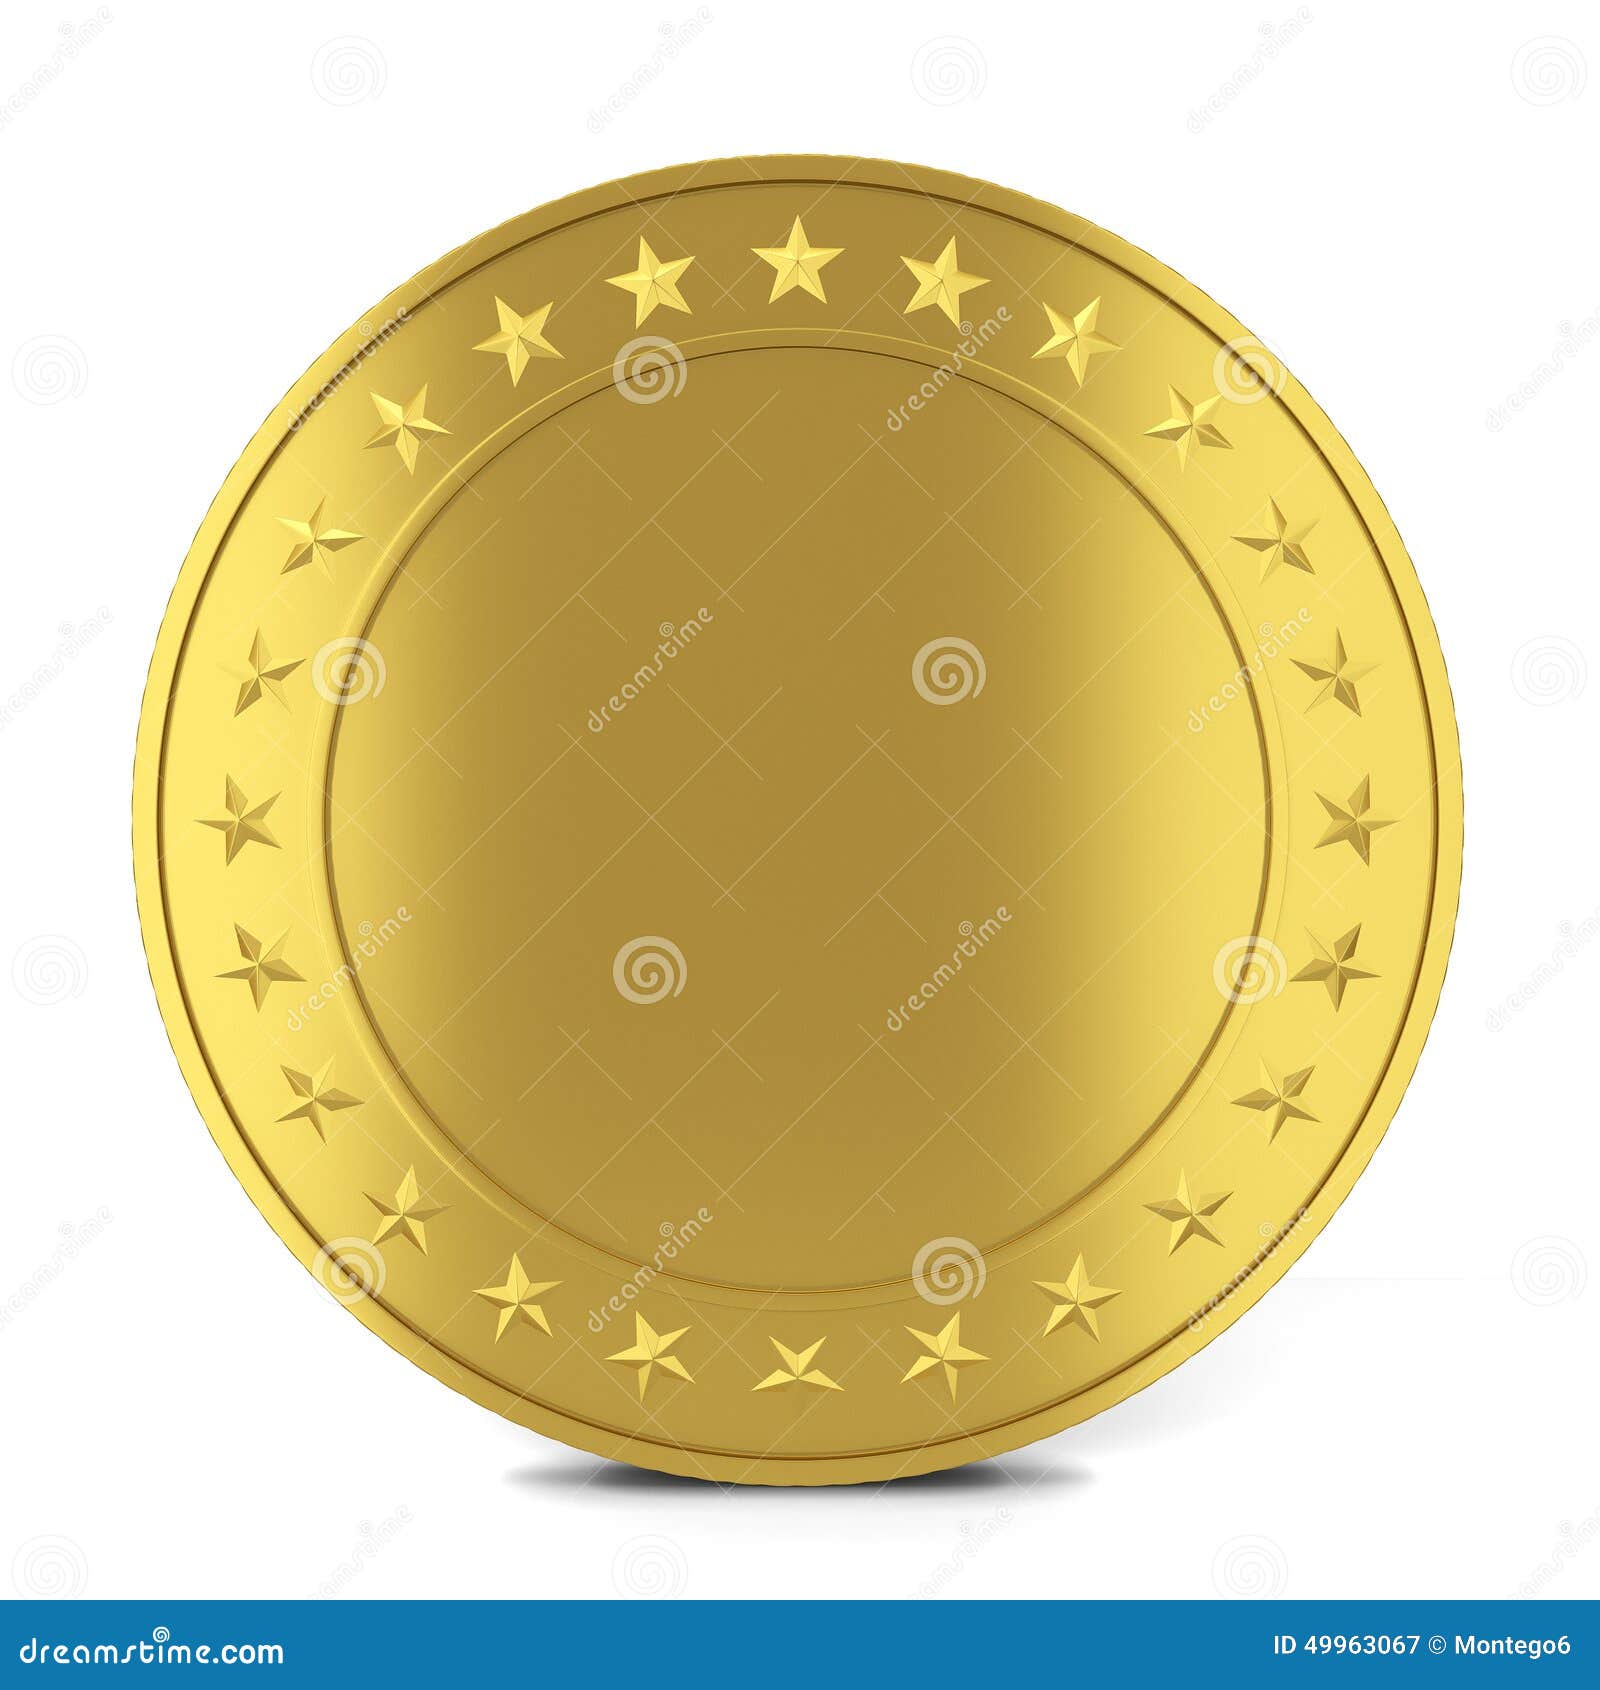 Golden coin stock illustration. Illustration of reflection - 49963067